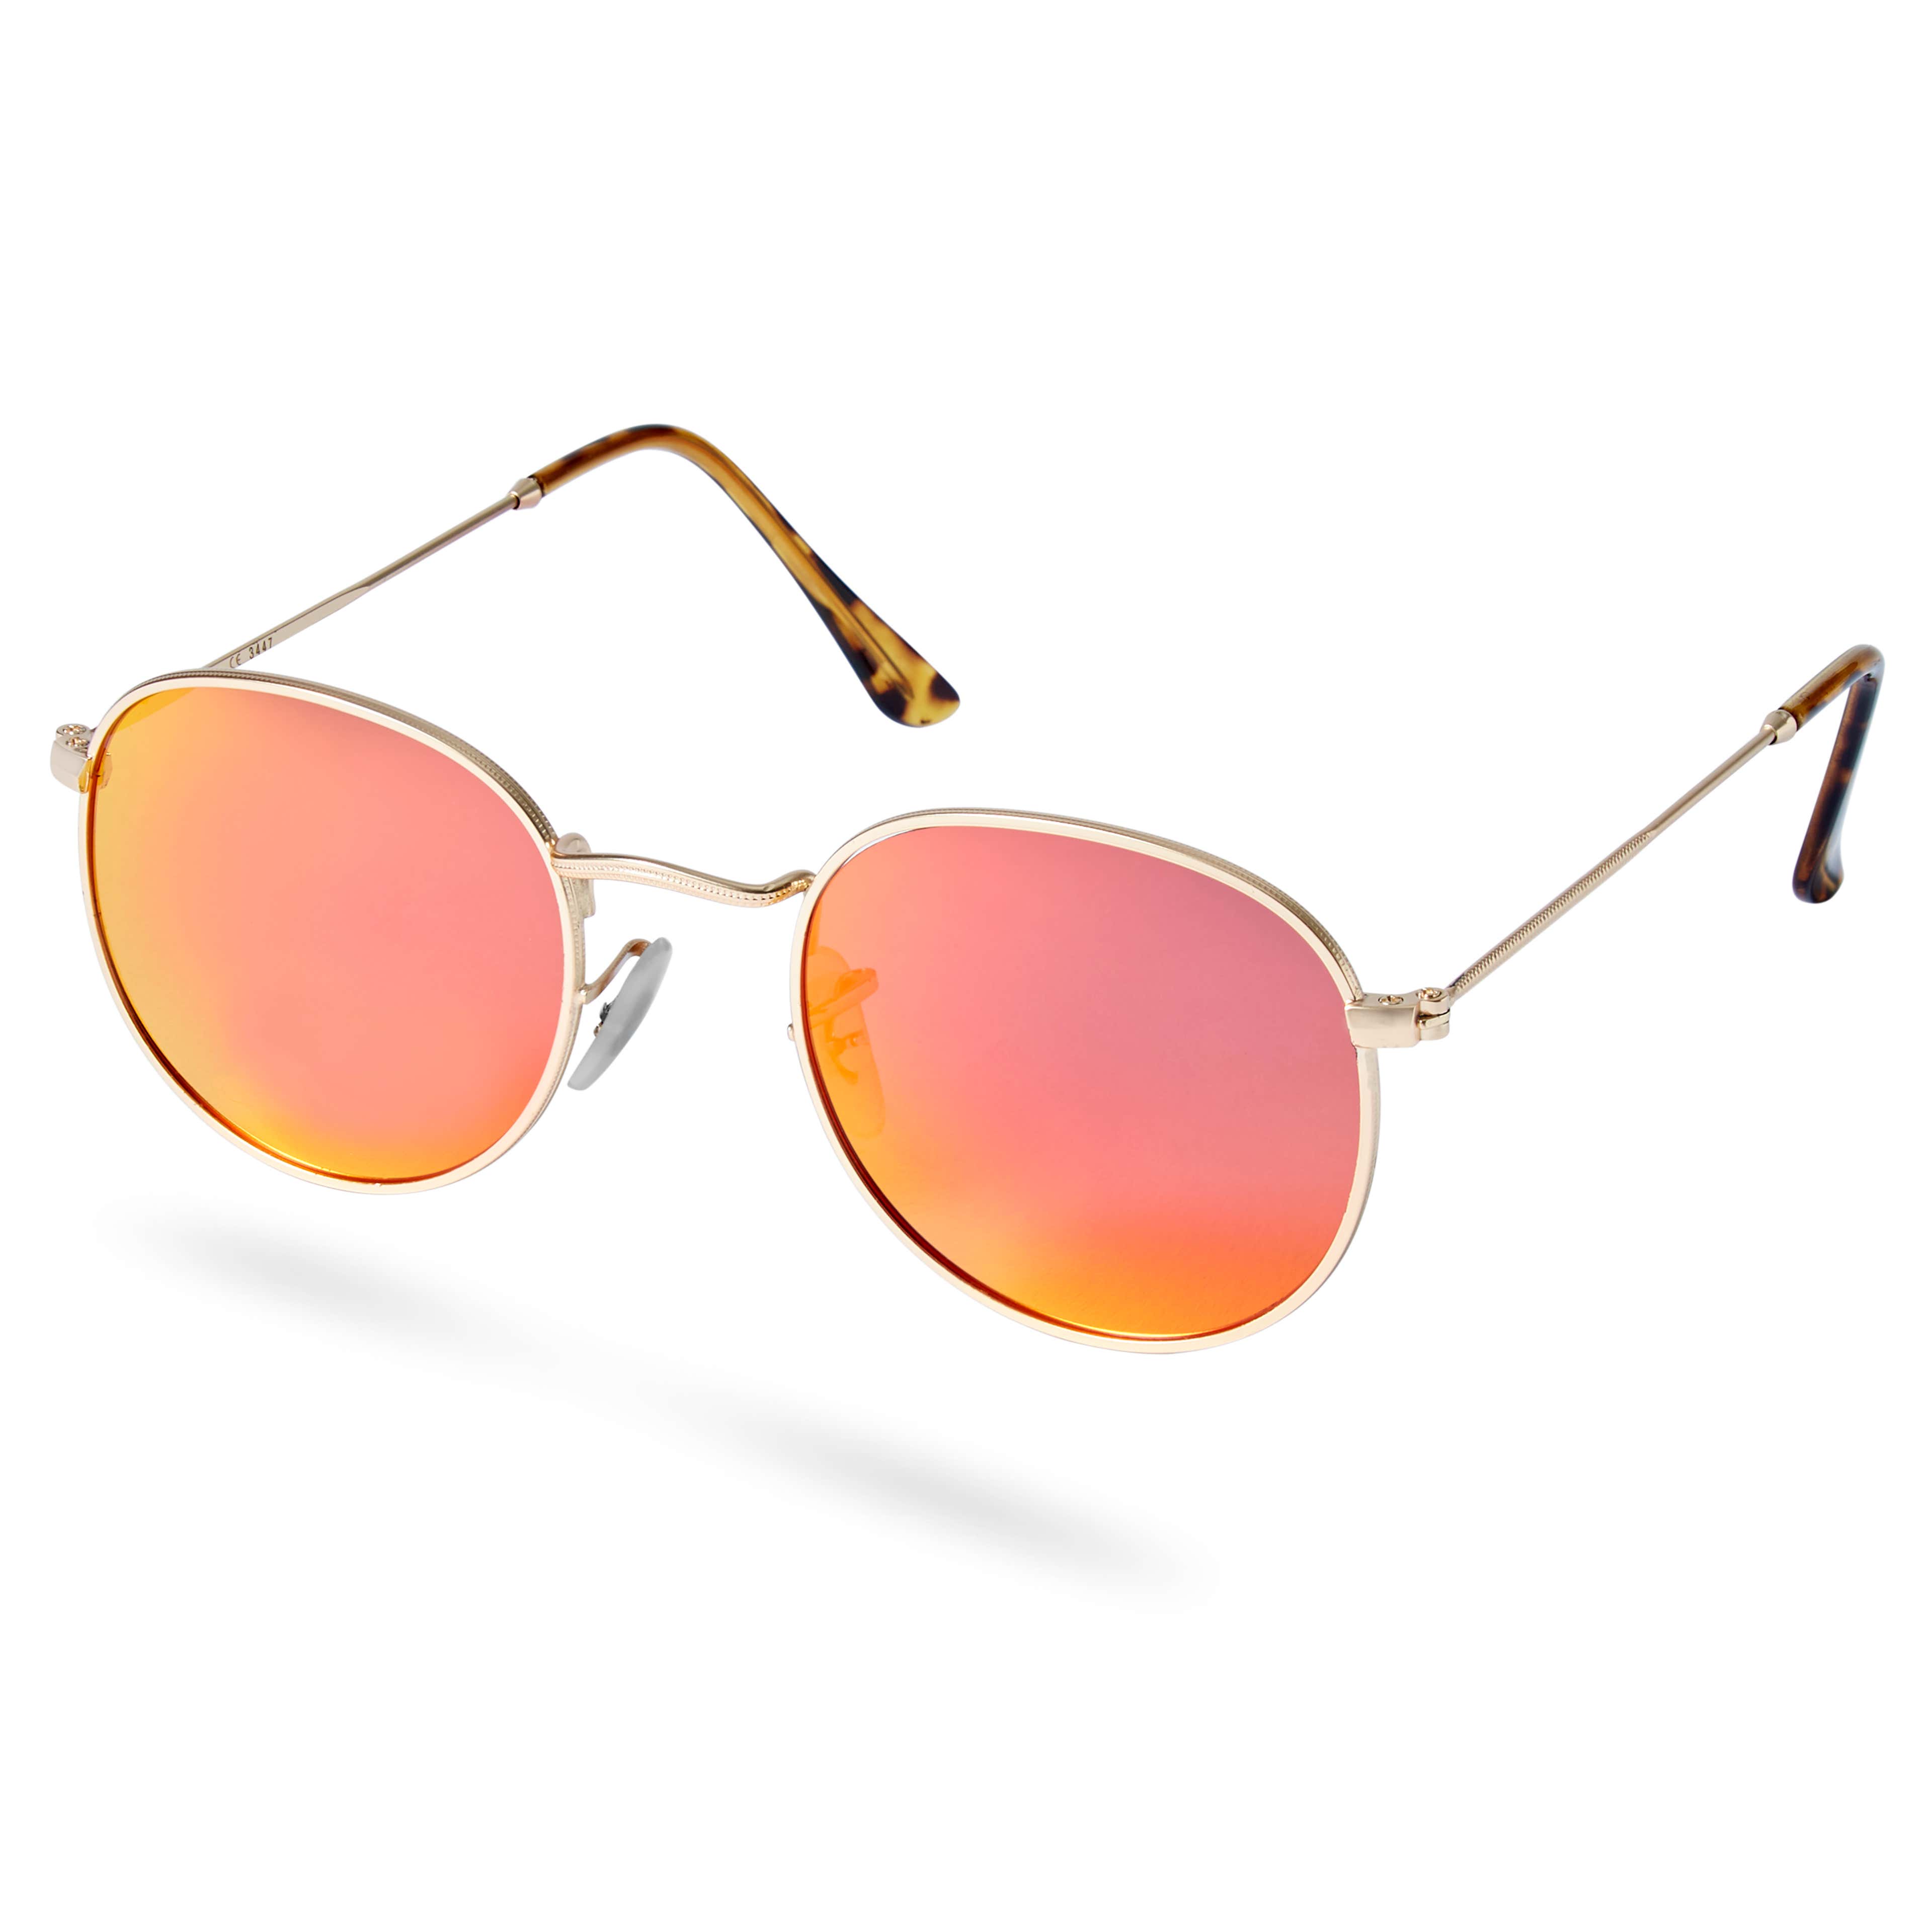 Dandy Pink Polarized Sunglasses